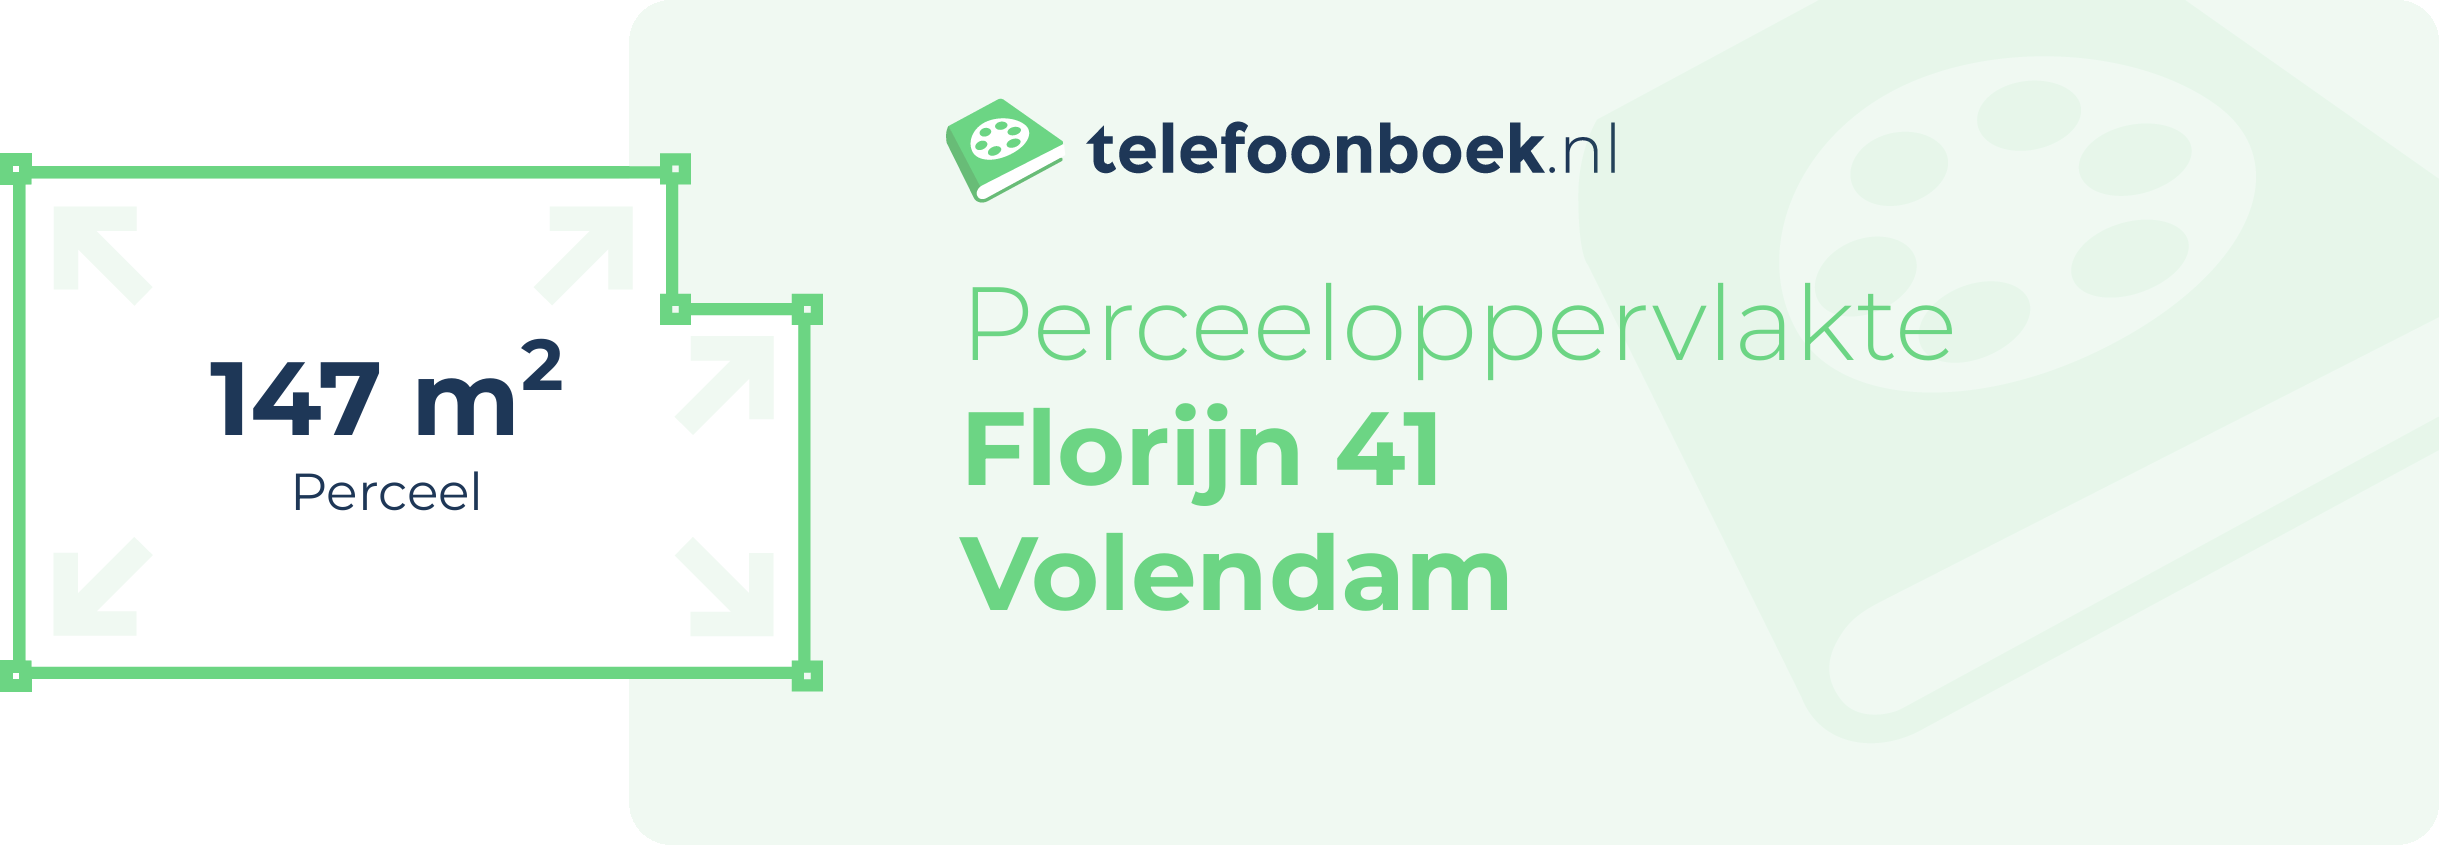 Perceeloppervlakte Florijn 41 Volendam